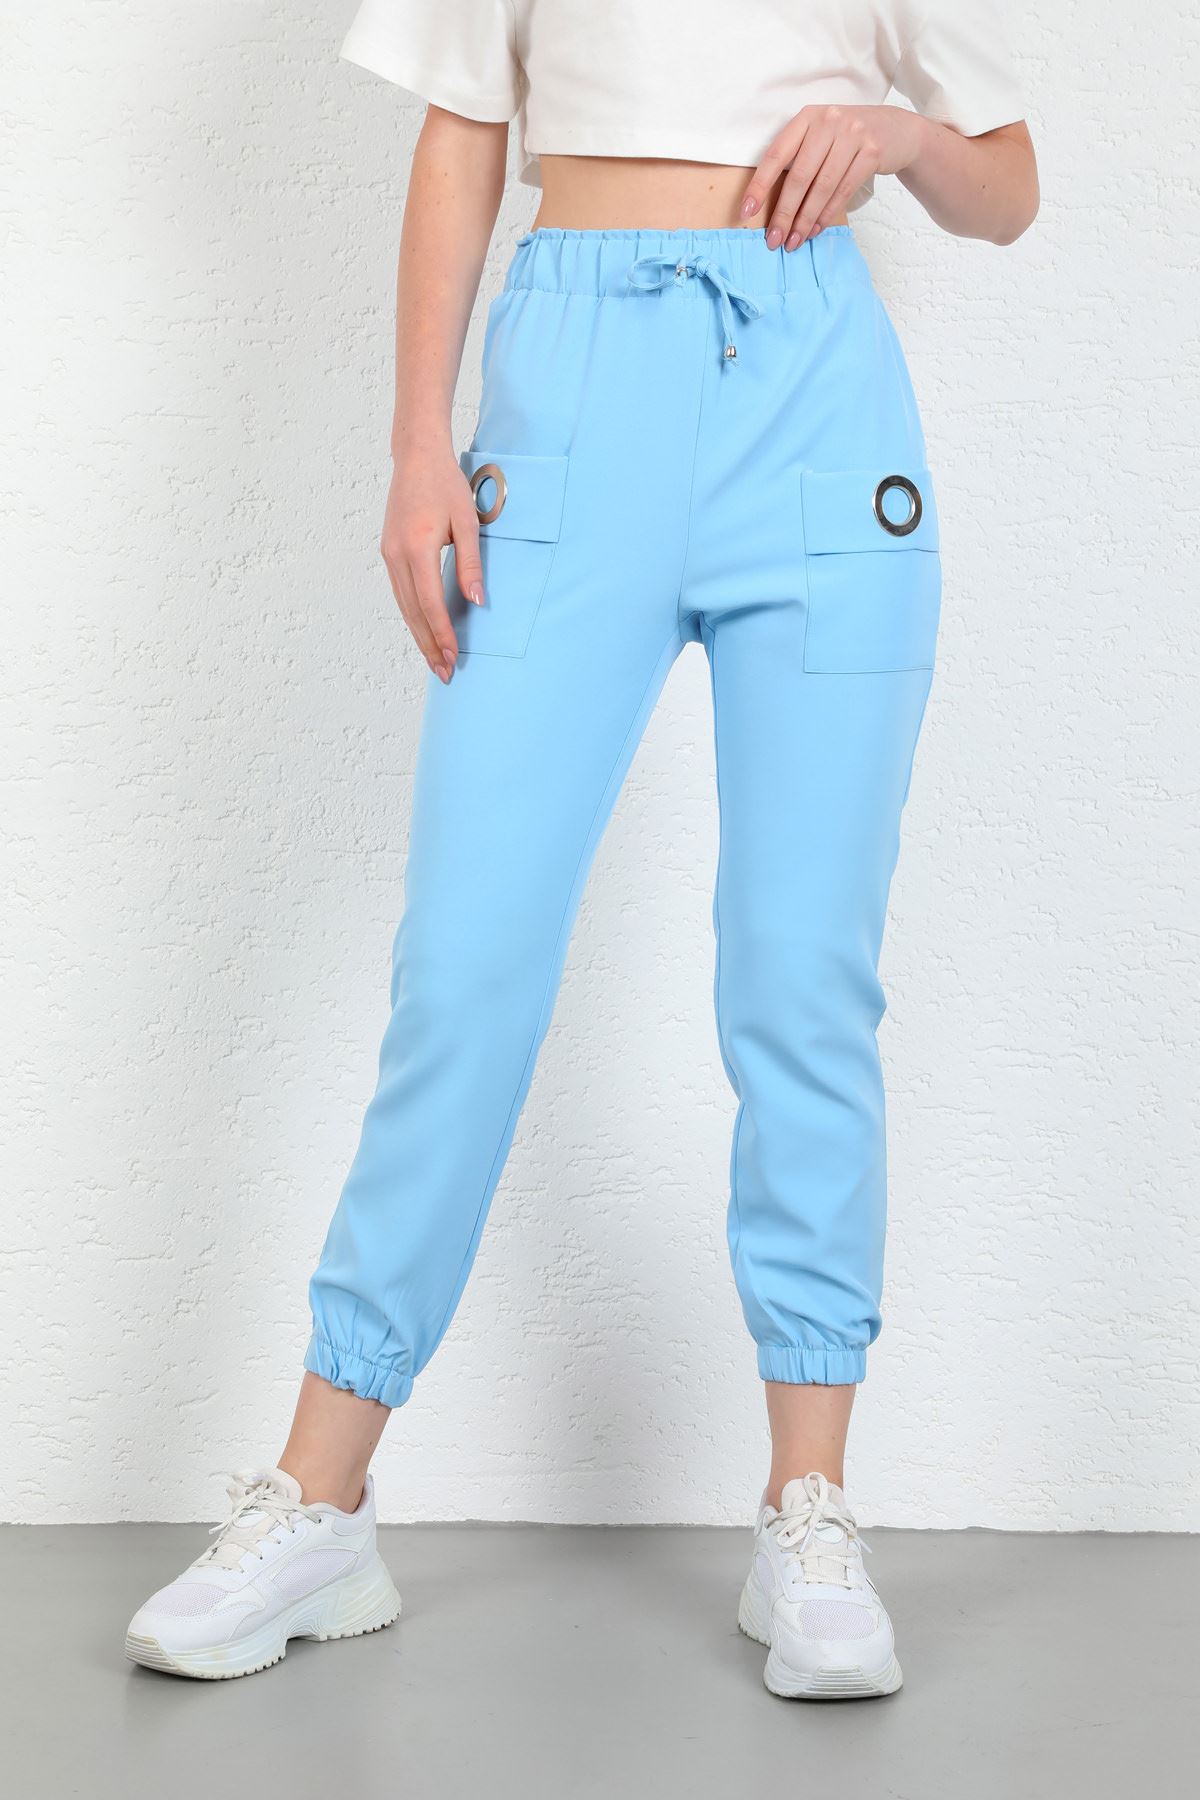 Licra Fabric Ankle Length Elastic Waist Jogger Women'S Trouser - Light Blue